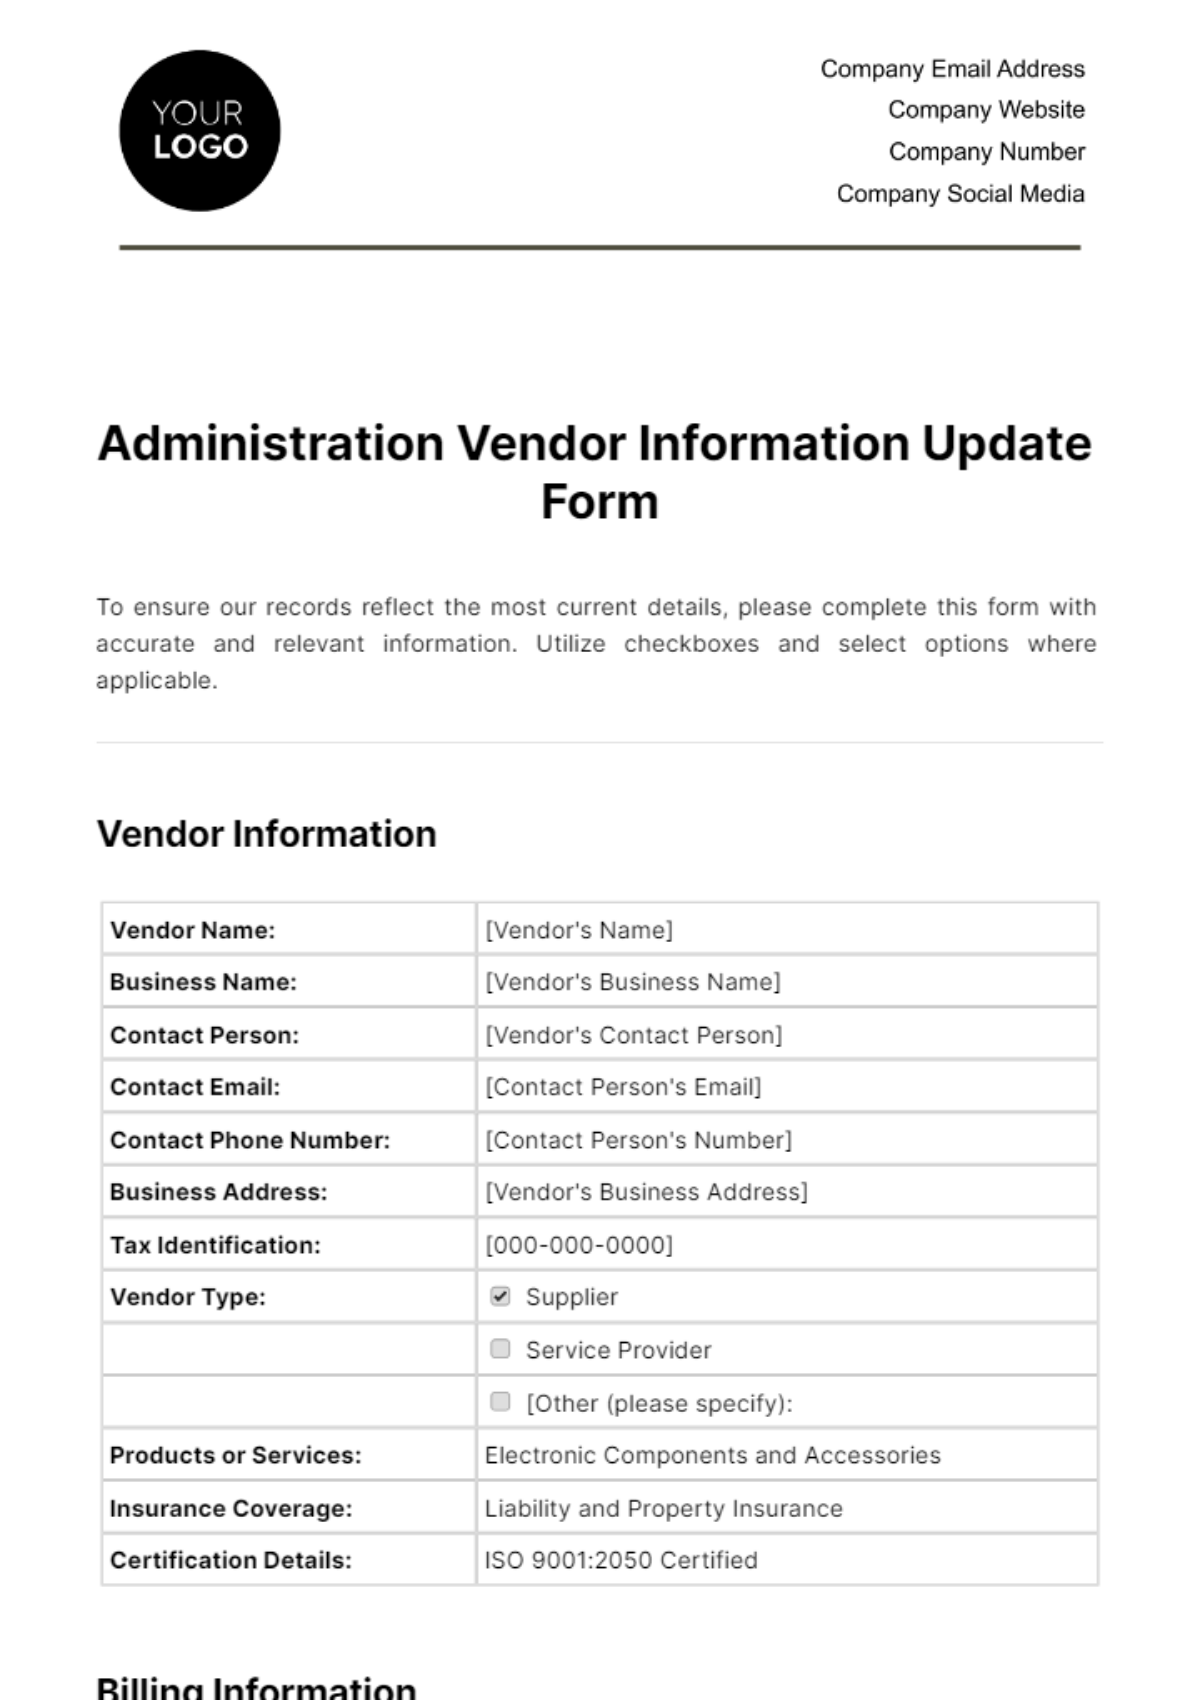 Administration Vendor Information Update Form Template